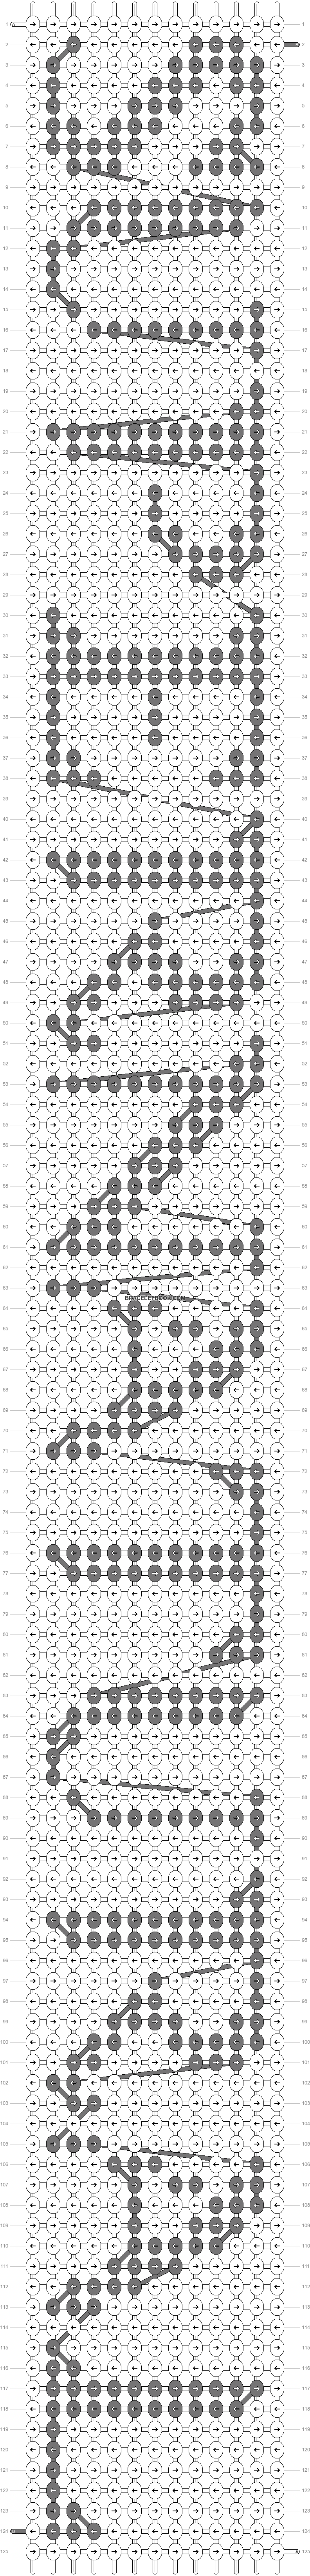 Alpha pattern #39461 variation #106561 pattern